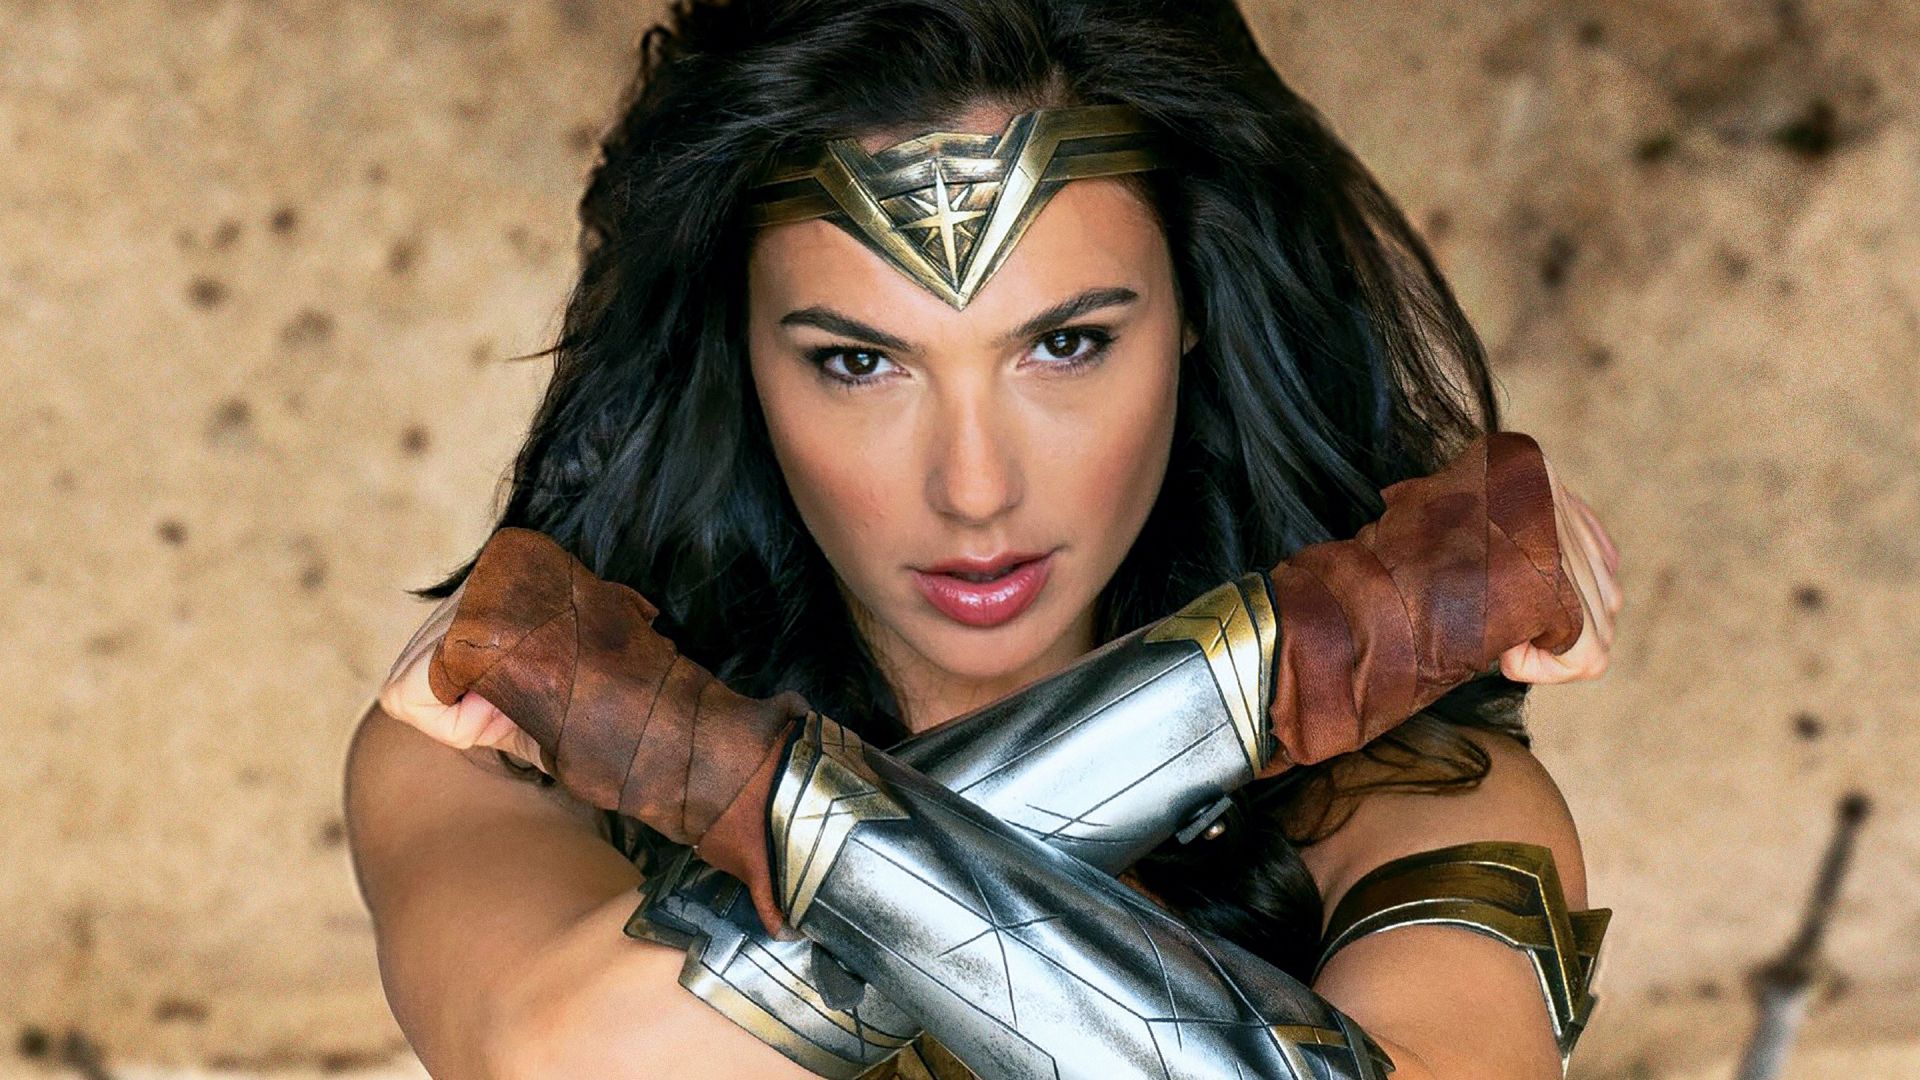 Desktop Wallpaper Gal Gadot As Wonder Woman In Movie, Hd Image, Picture,  Background, Vzhr50